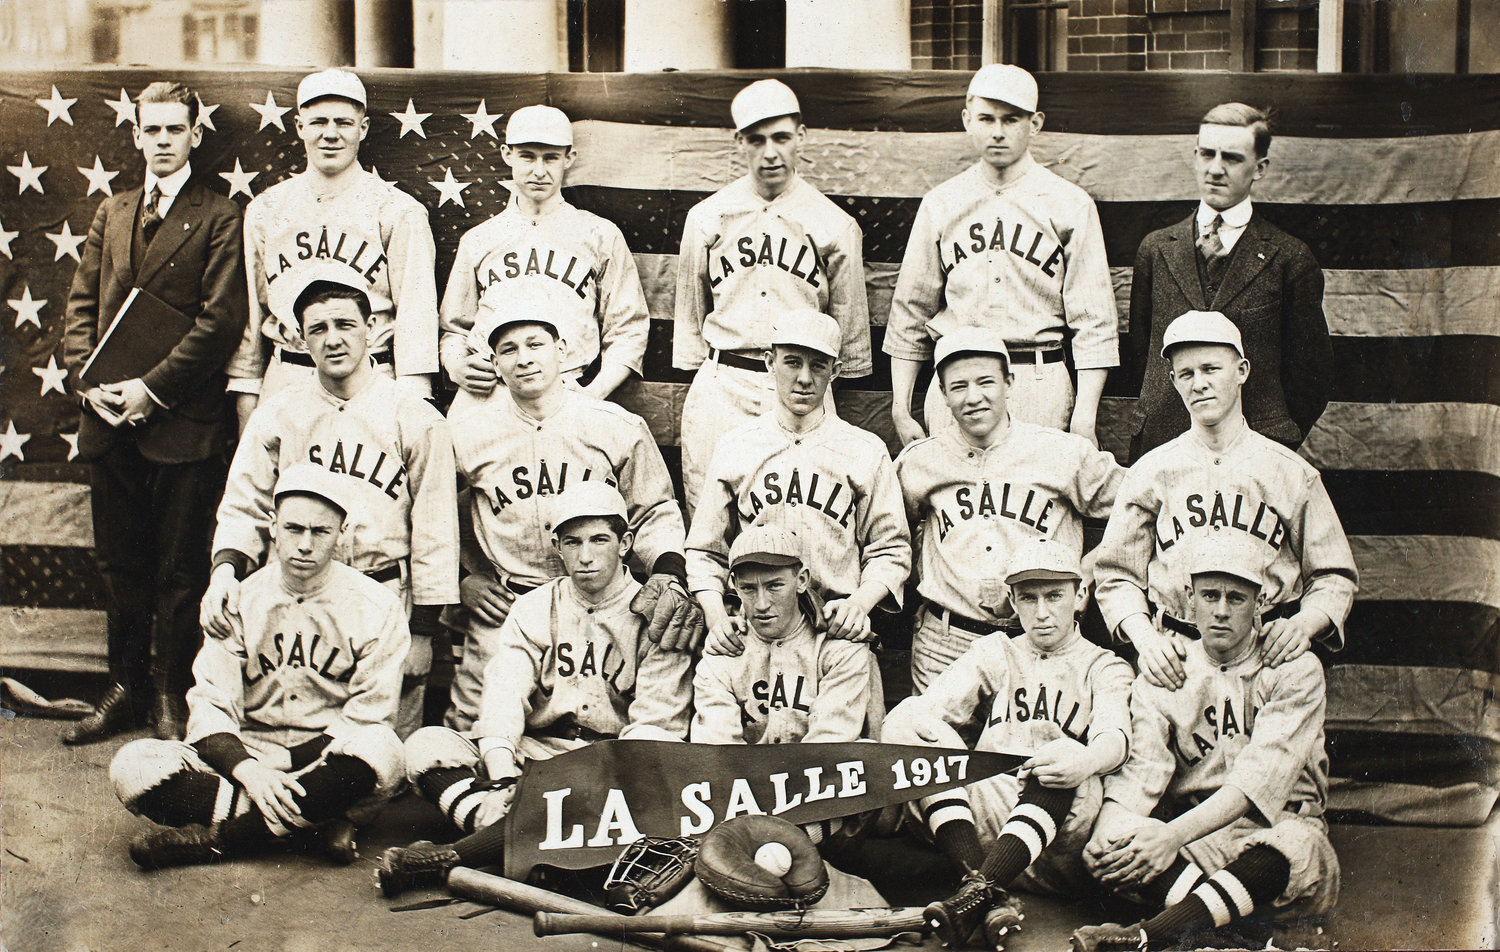 The La Salle Academy 1917 baseball team photo.